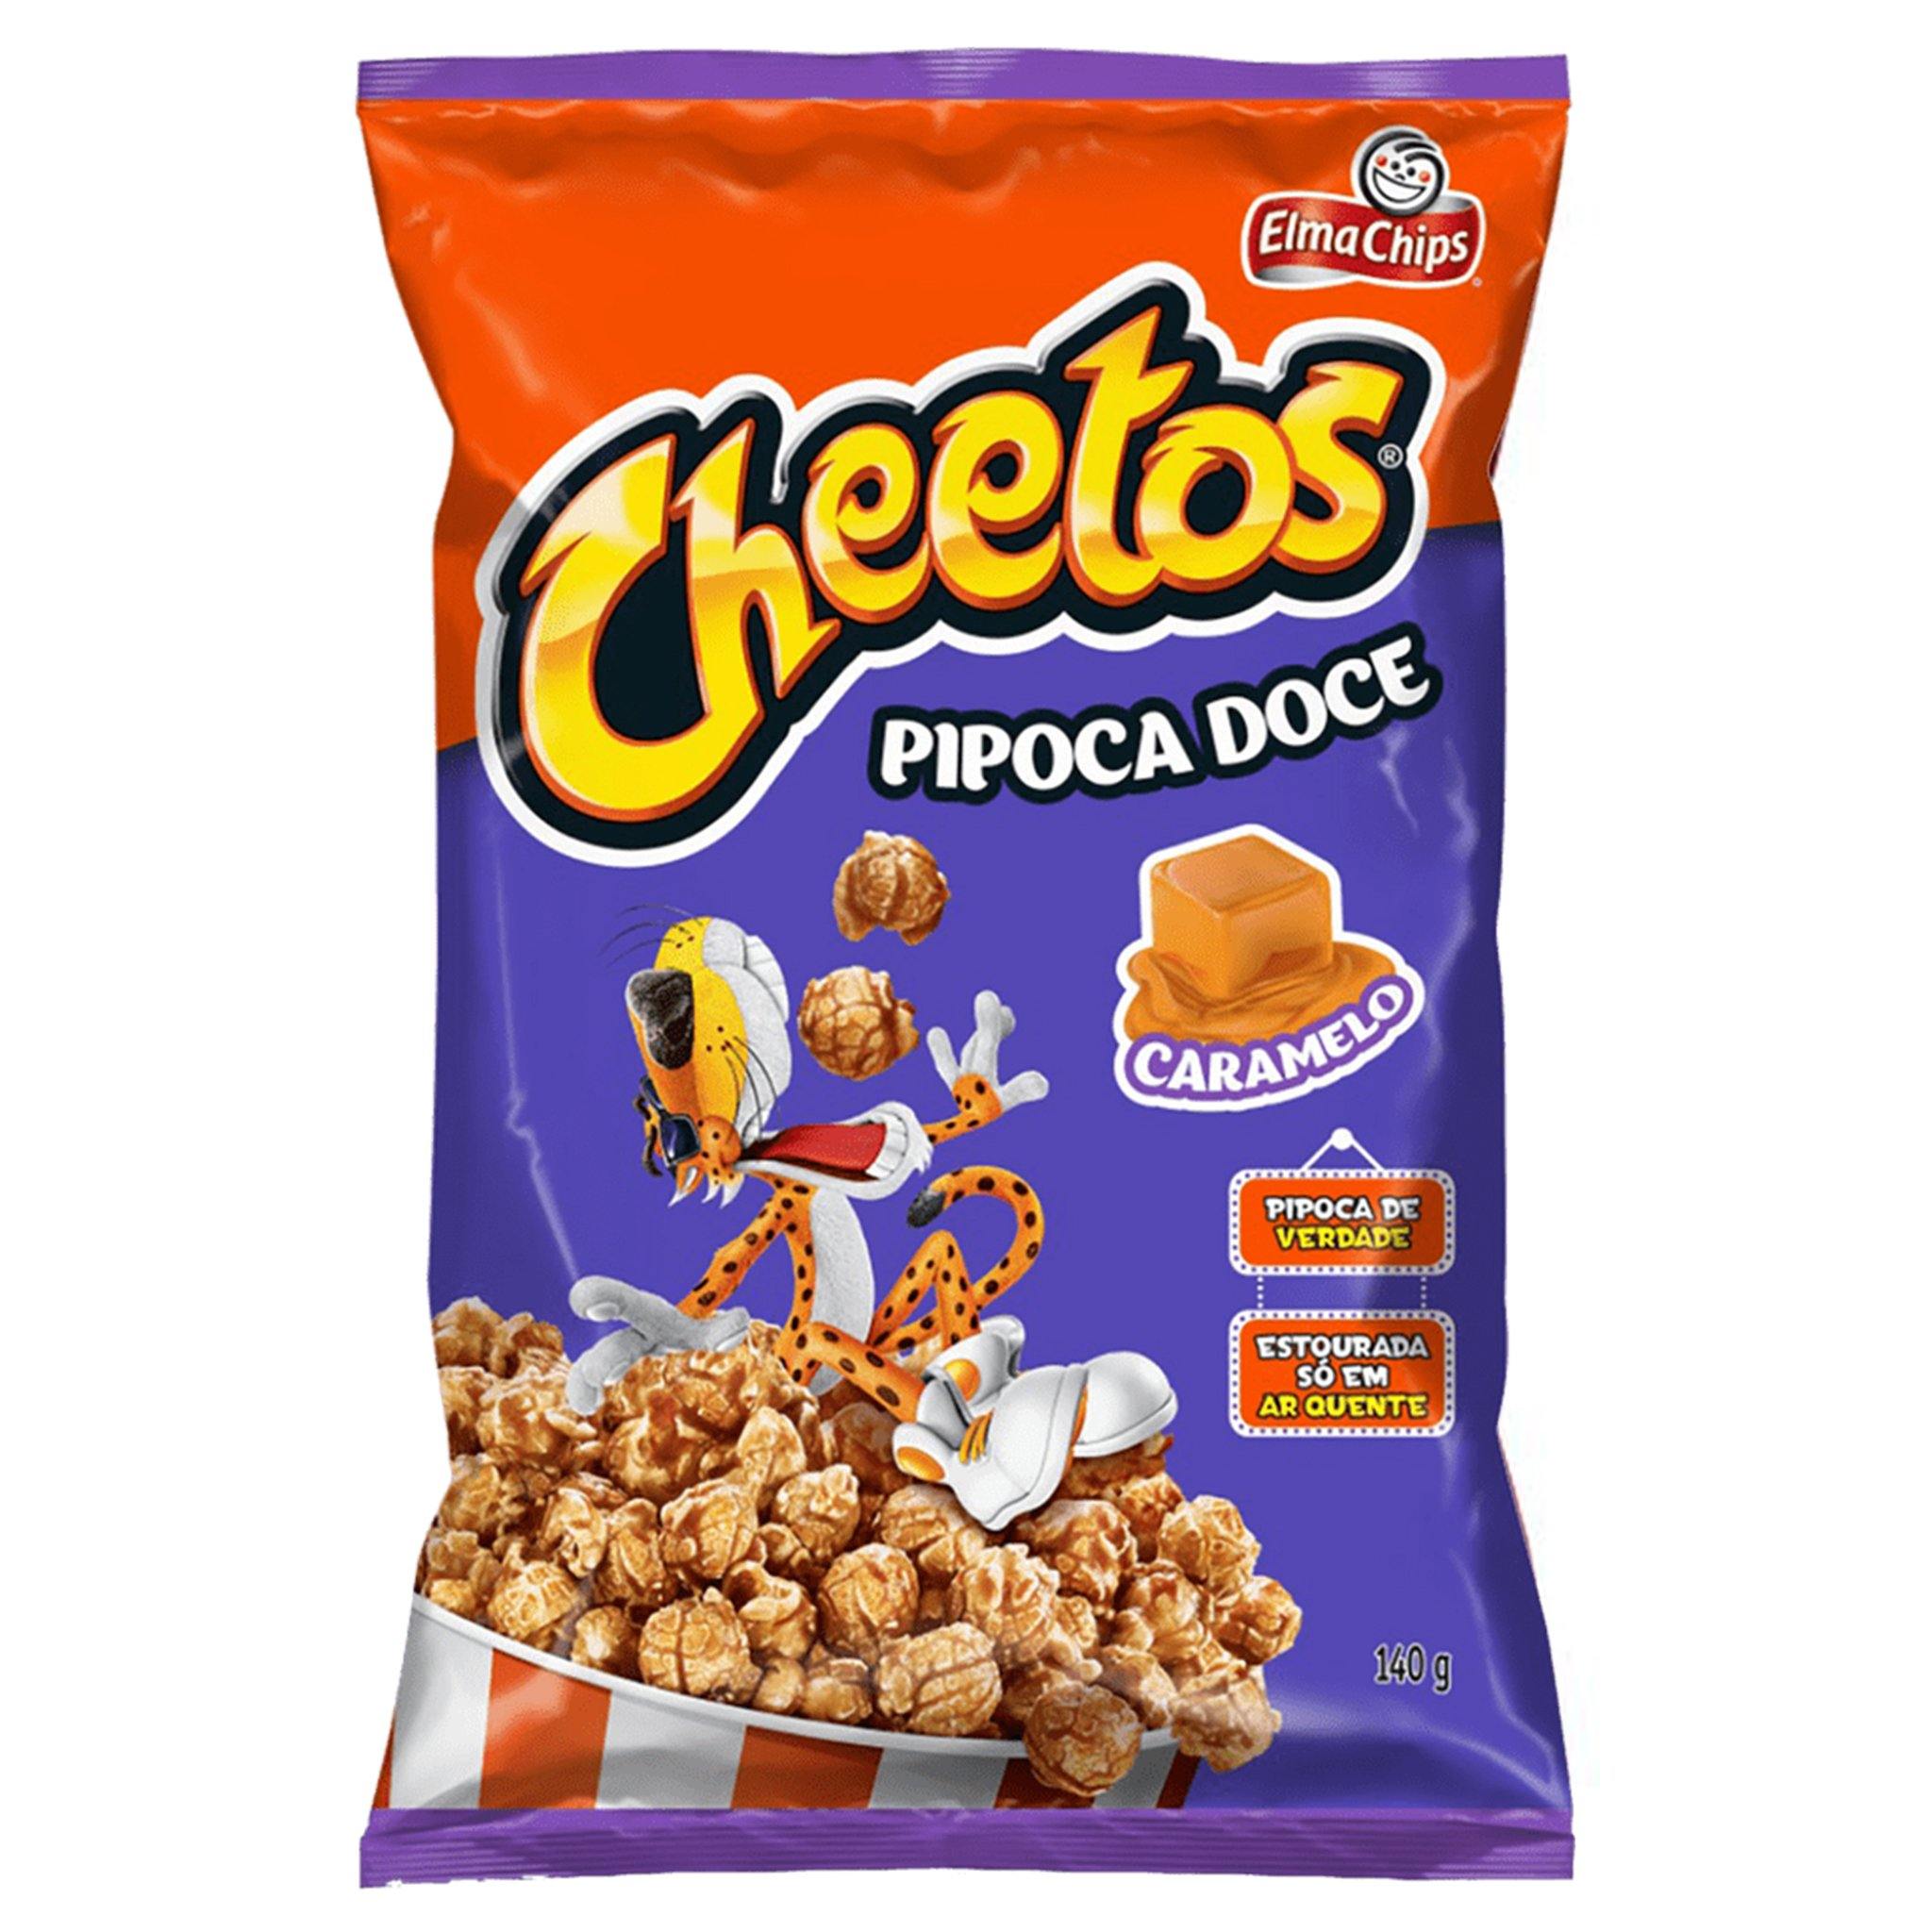 Cheetos Pipoca Doce Caramelo - Brazil - Sweet Exotics